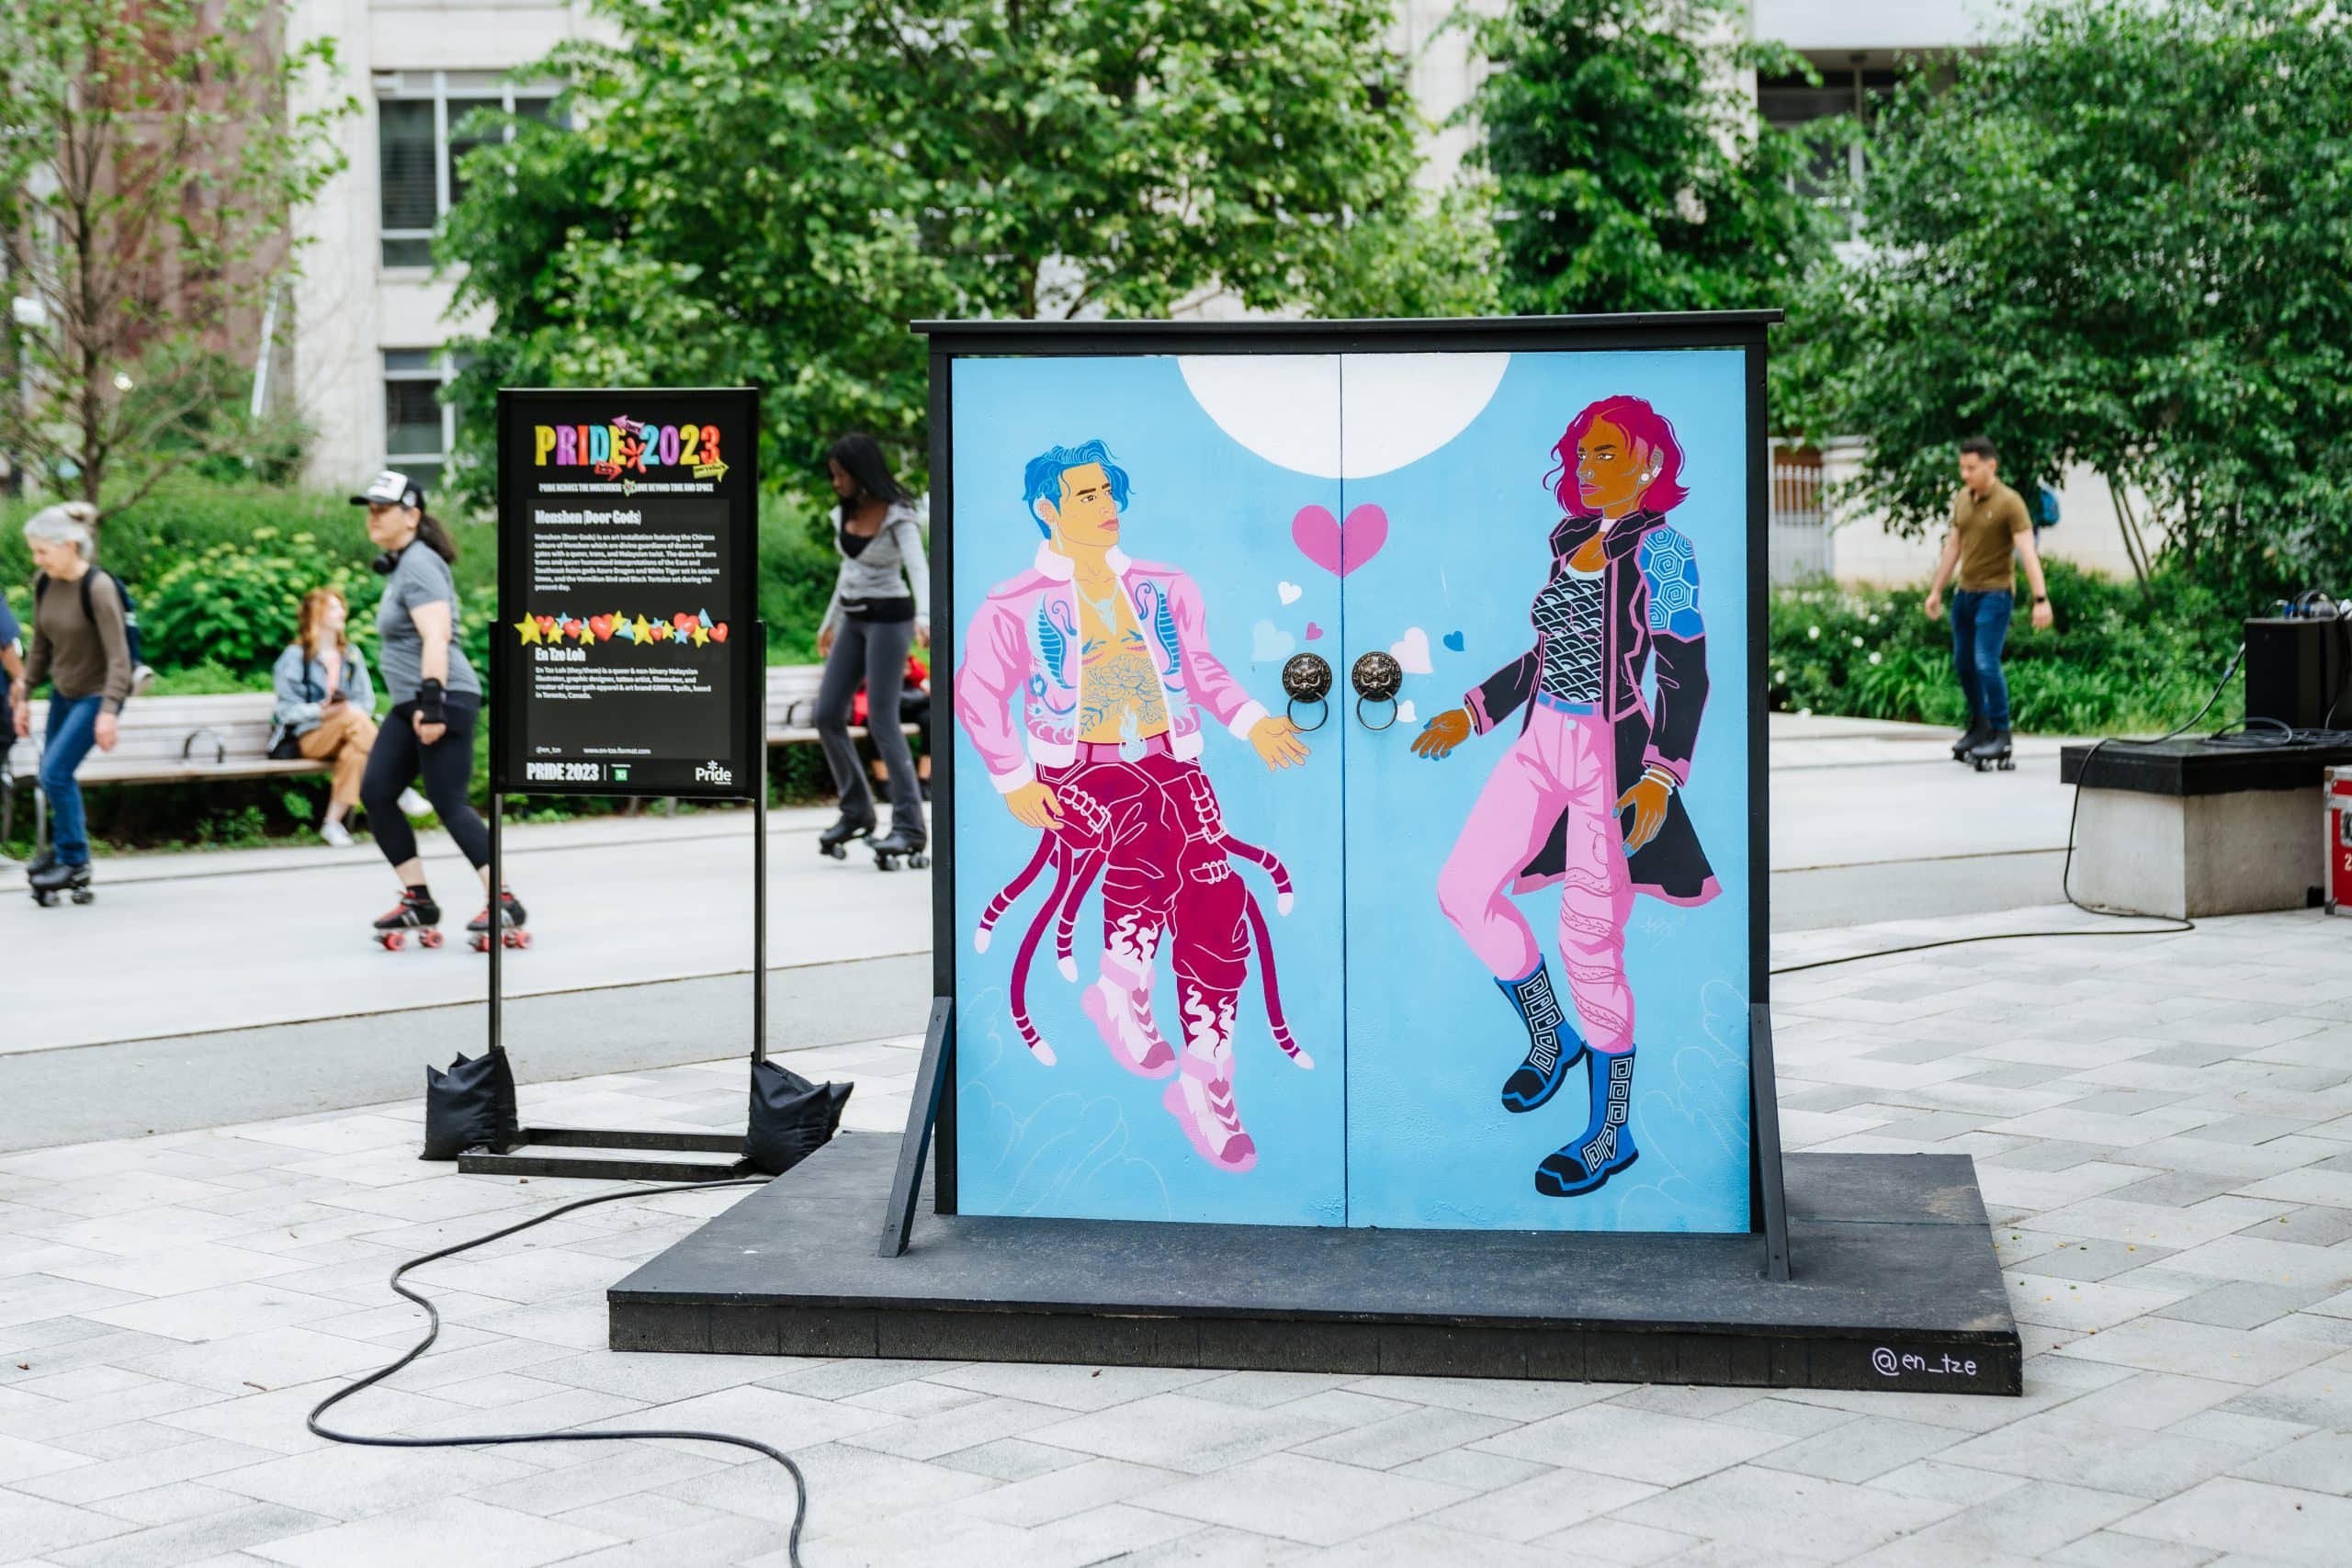 Pride Toronto's 2023 Visual Art Installments